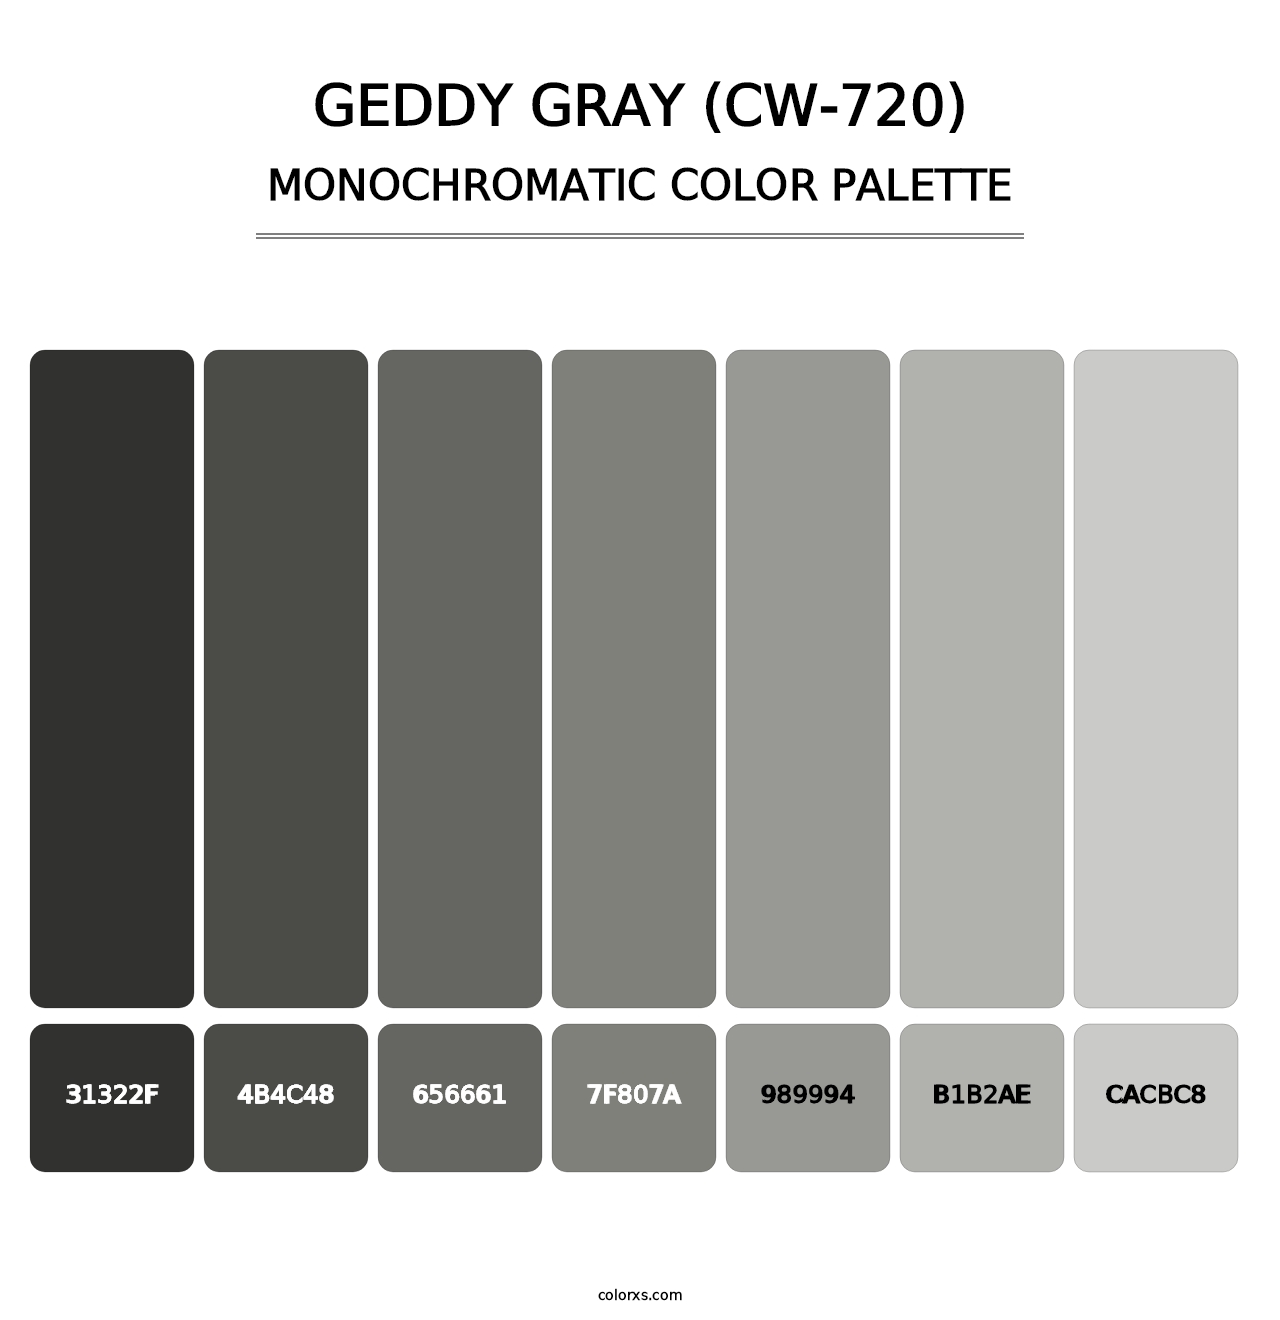 Geddy Gray (CW-720) - Monochromatic Color Palette